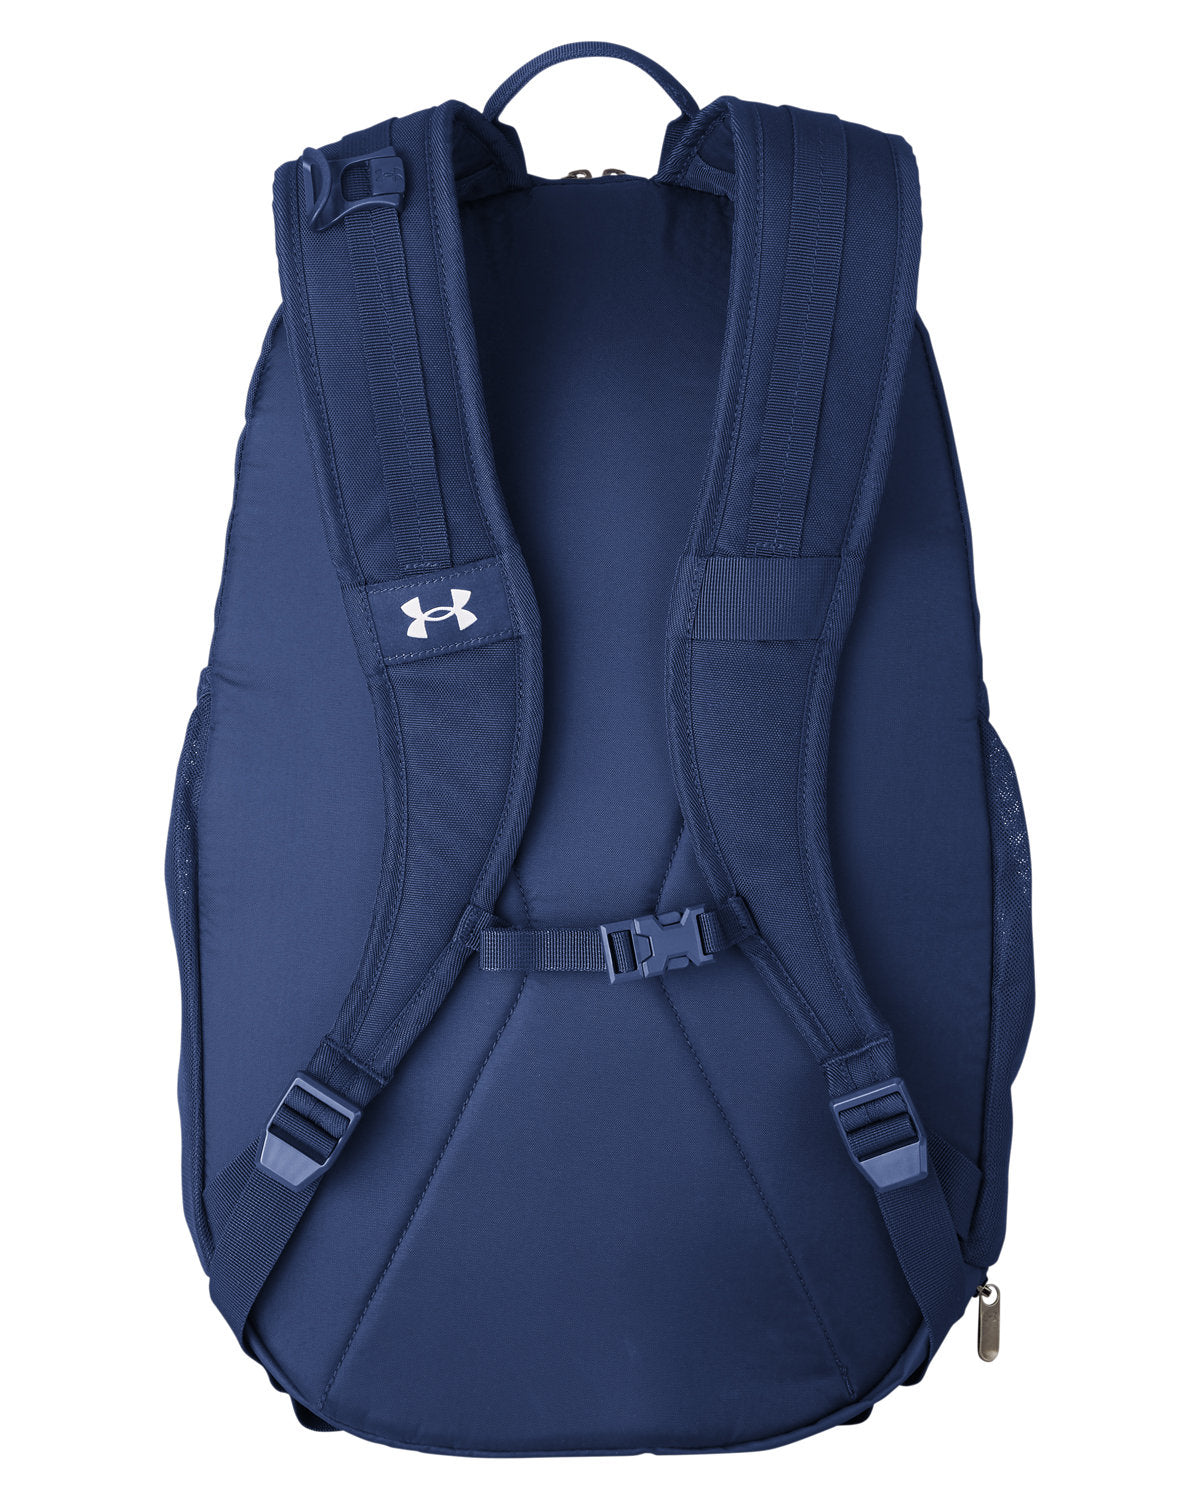 Under Armour Hustle Team Branded Backpacks, Midnght Navy